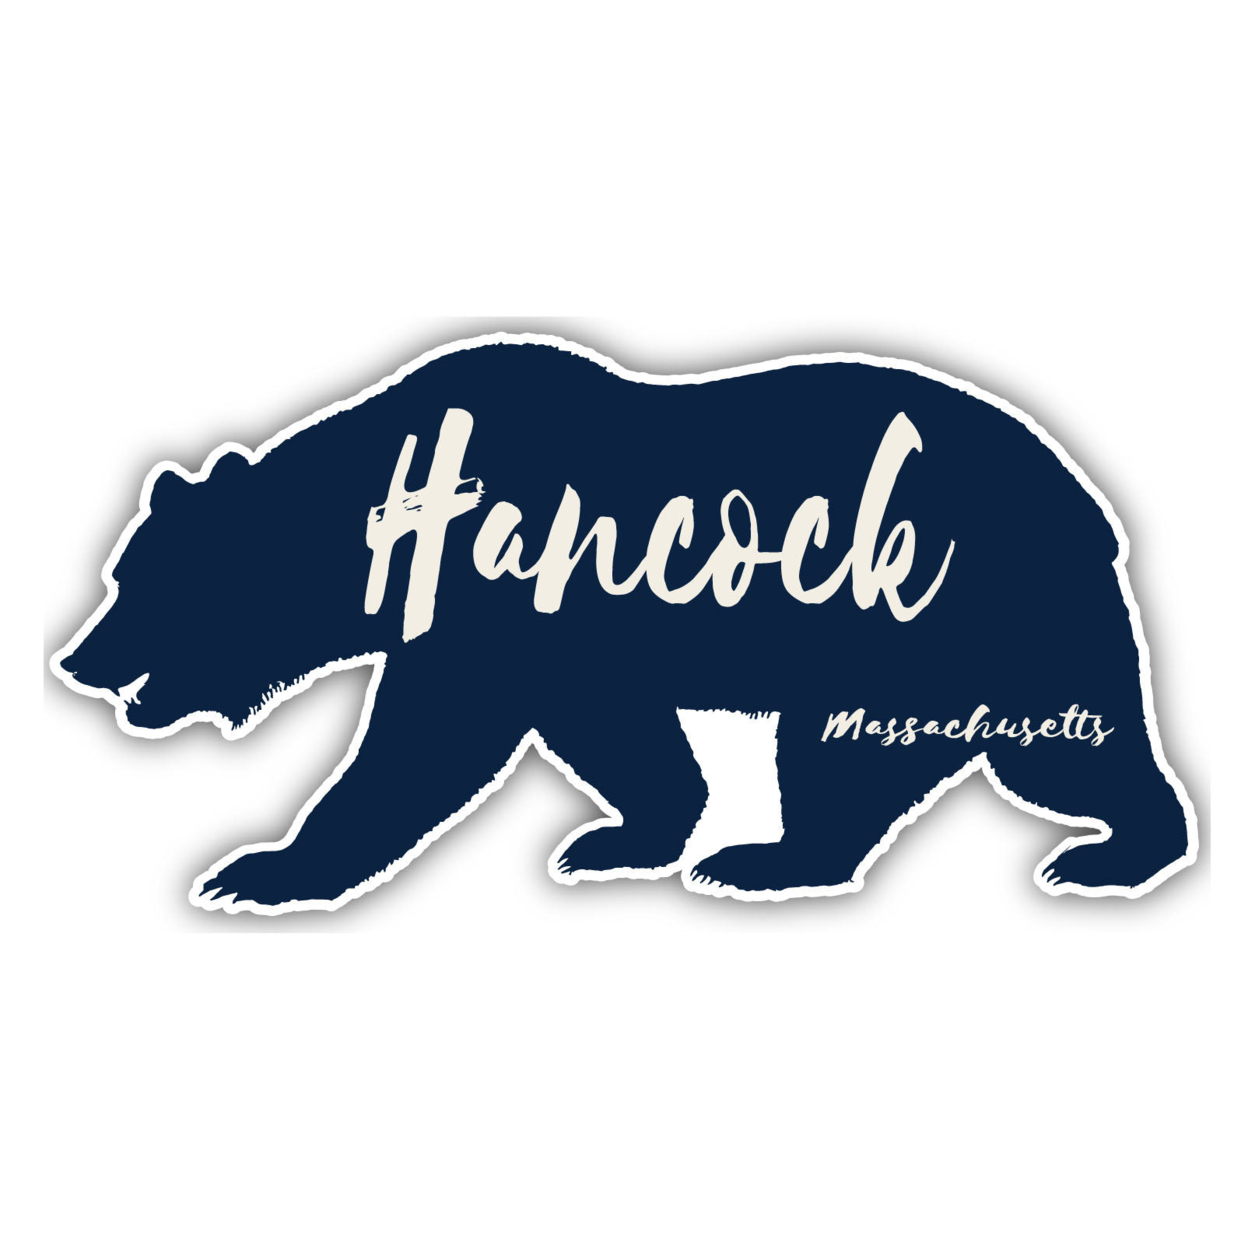 Hancock Massachusetts Souvenir Decorative Stickers (Choose Theme And Size) - 4-Pack, 4-Inch, Tent